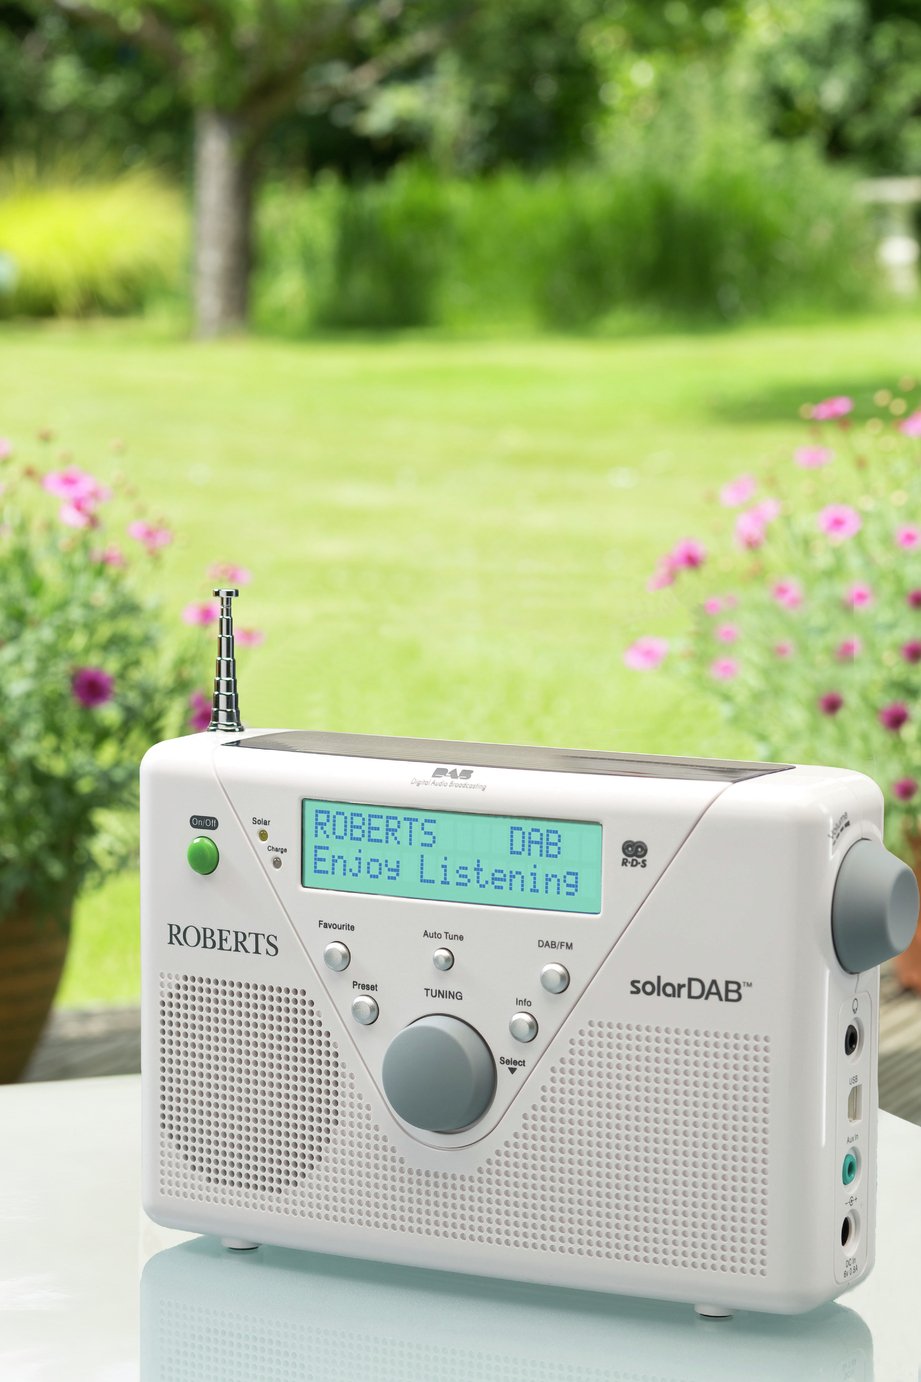 Roberts Solar DAB/FM Solar Powered Radio Review